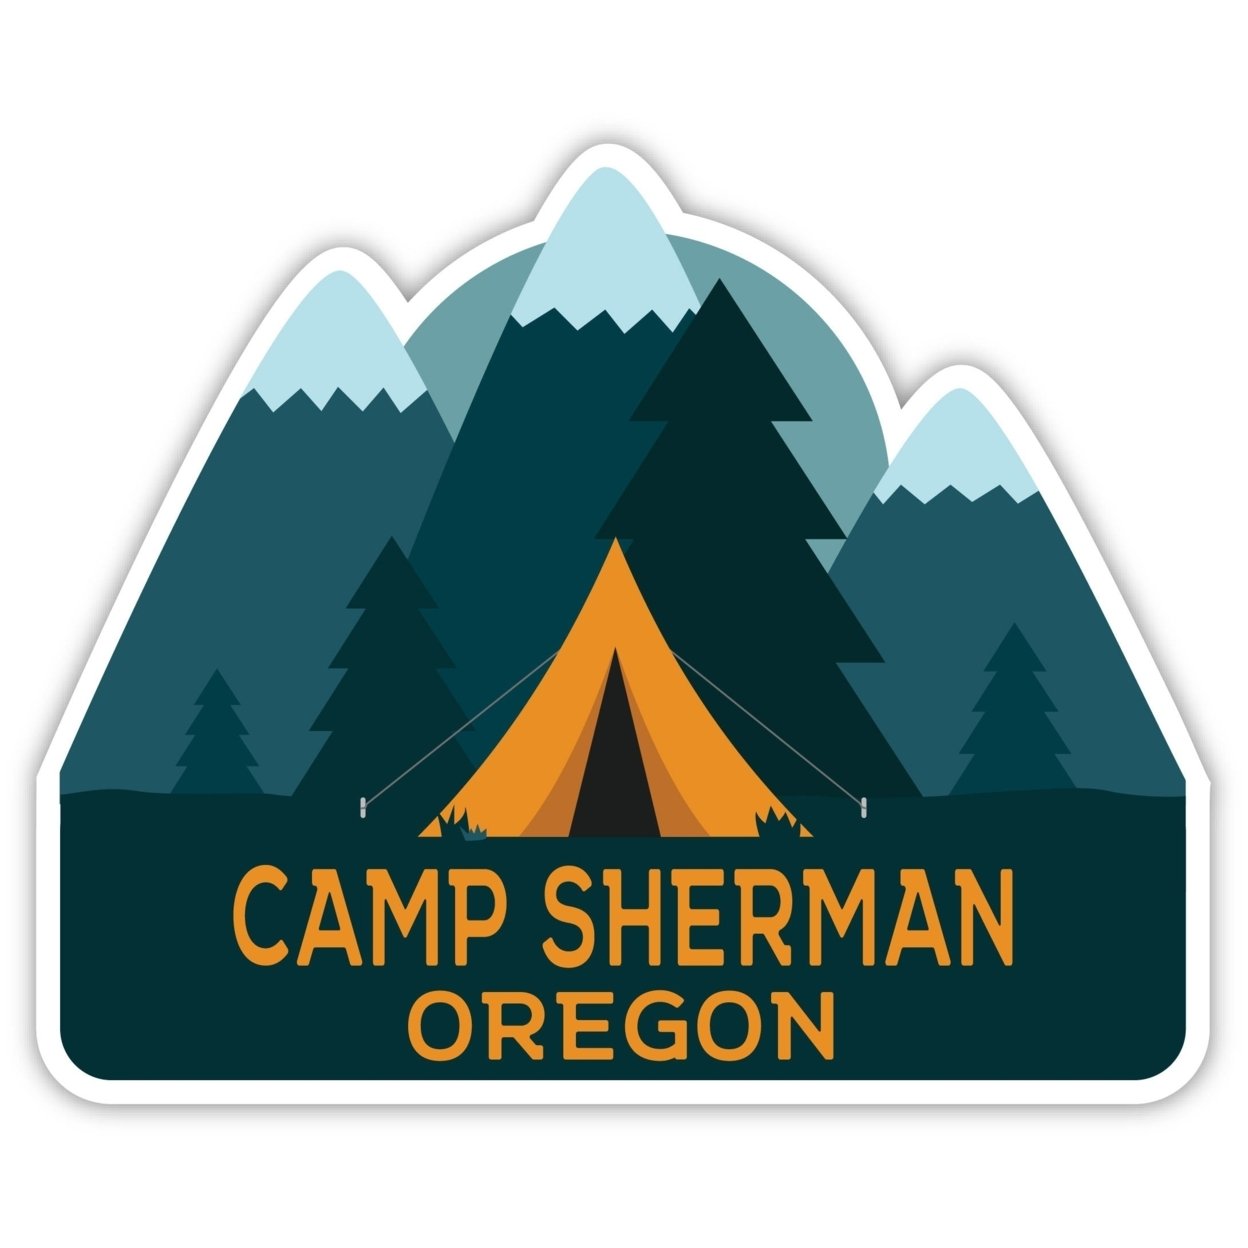 Camp Sherman Oregon Souvenir Decorative Stickers (Choose Theme And Size) - 4-Pack, 6-Inch, Tent